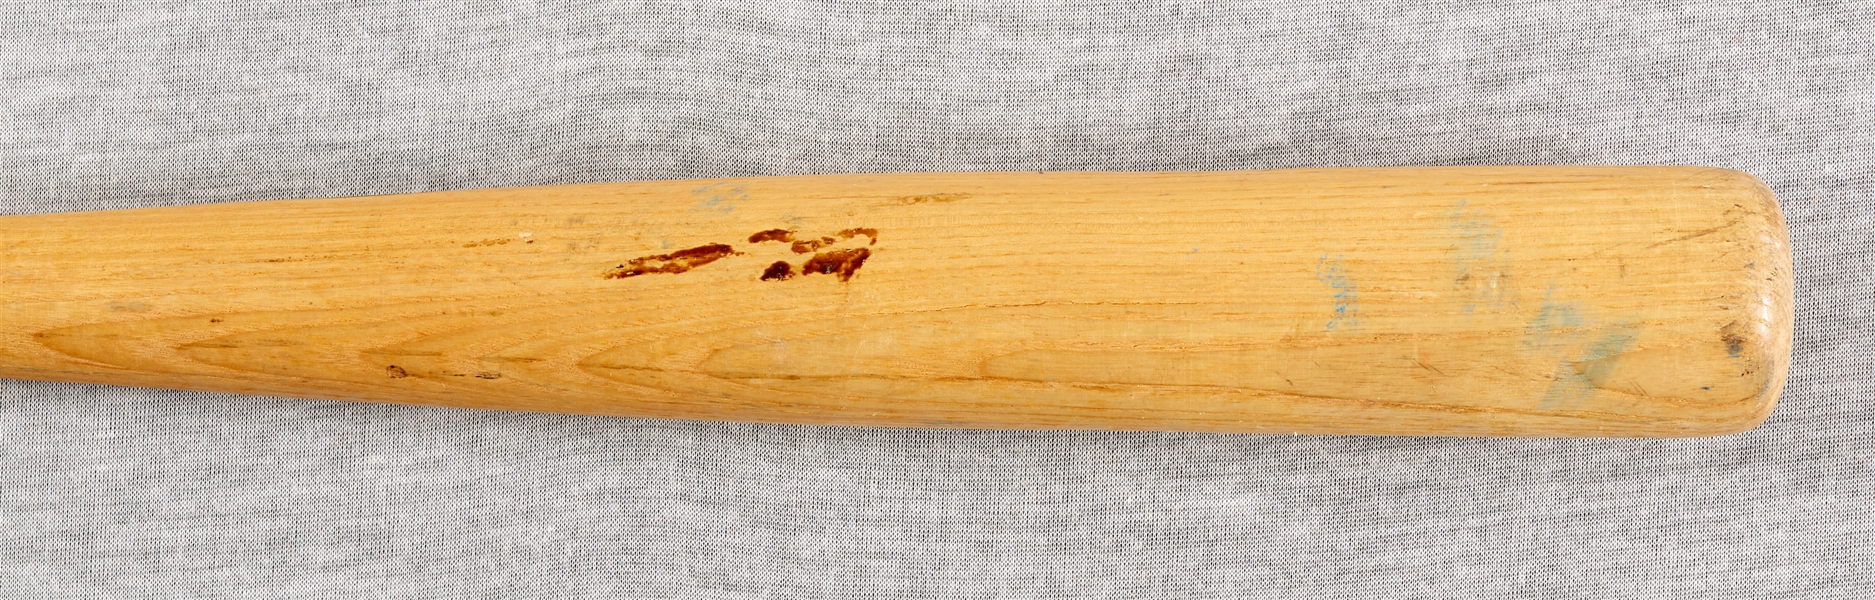 Rickey Henderson 1986-89 Game-Used & Signed Louisville Slugger Bat (BAS) (Graded PSA/DNA GU 9.5)